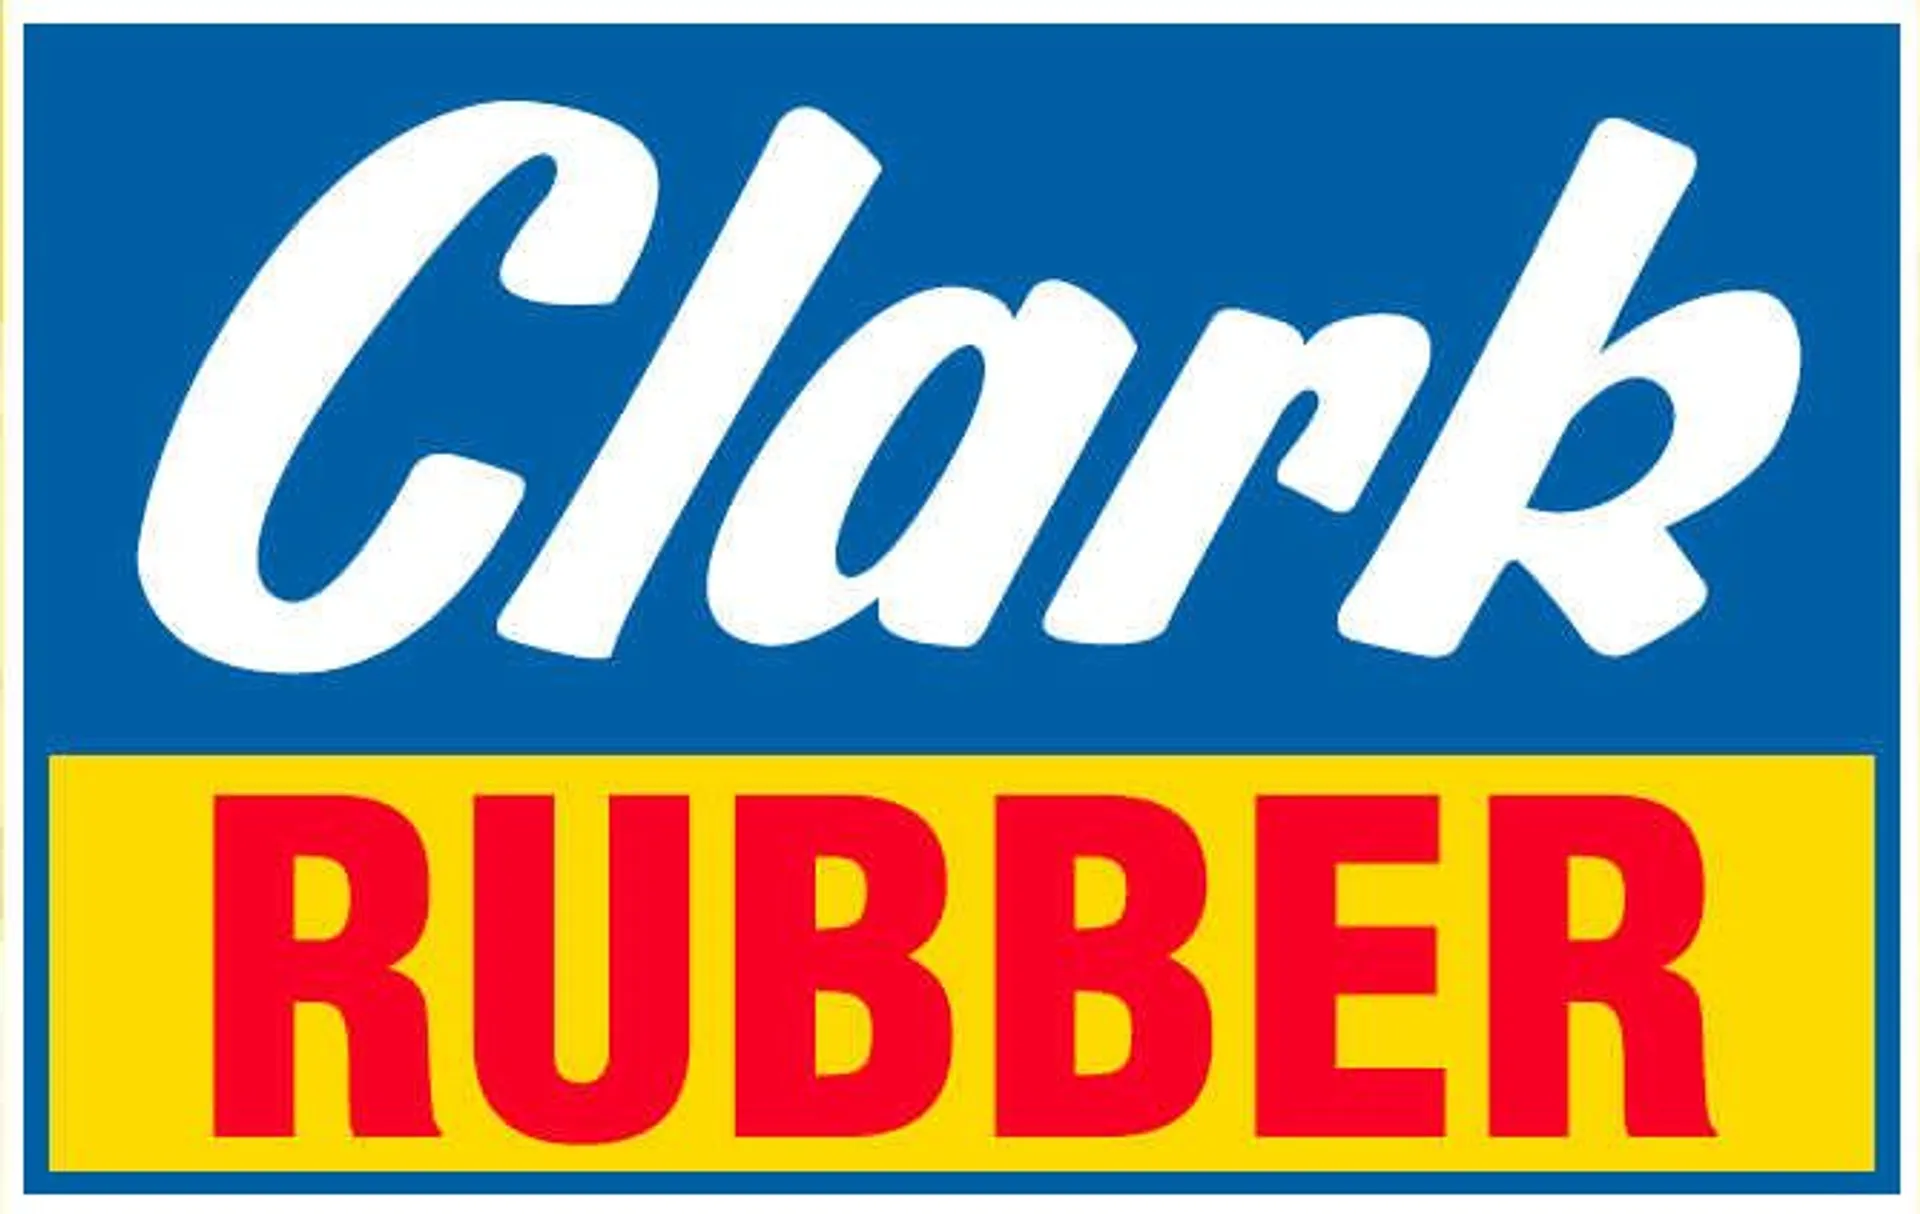 CLARK RUBBER logo of current catalogue